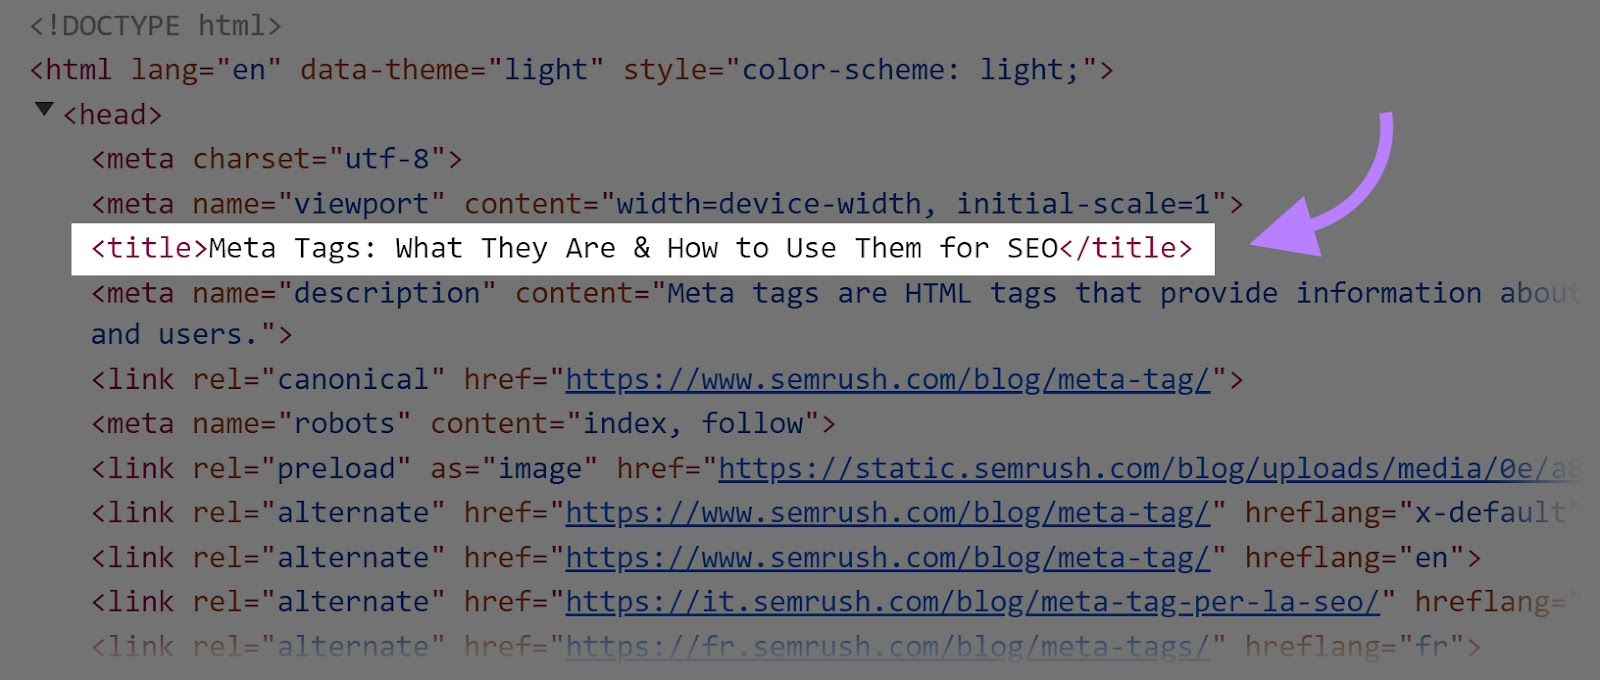 Title tag shown successful  the HTML codification  of a Semrush article.